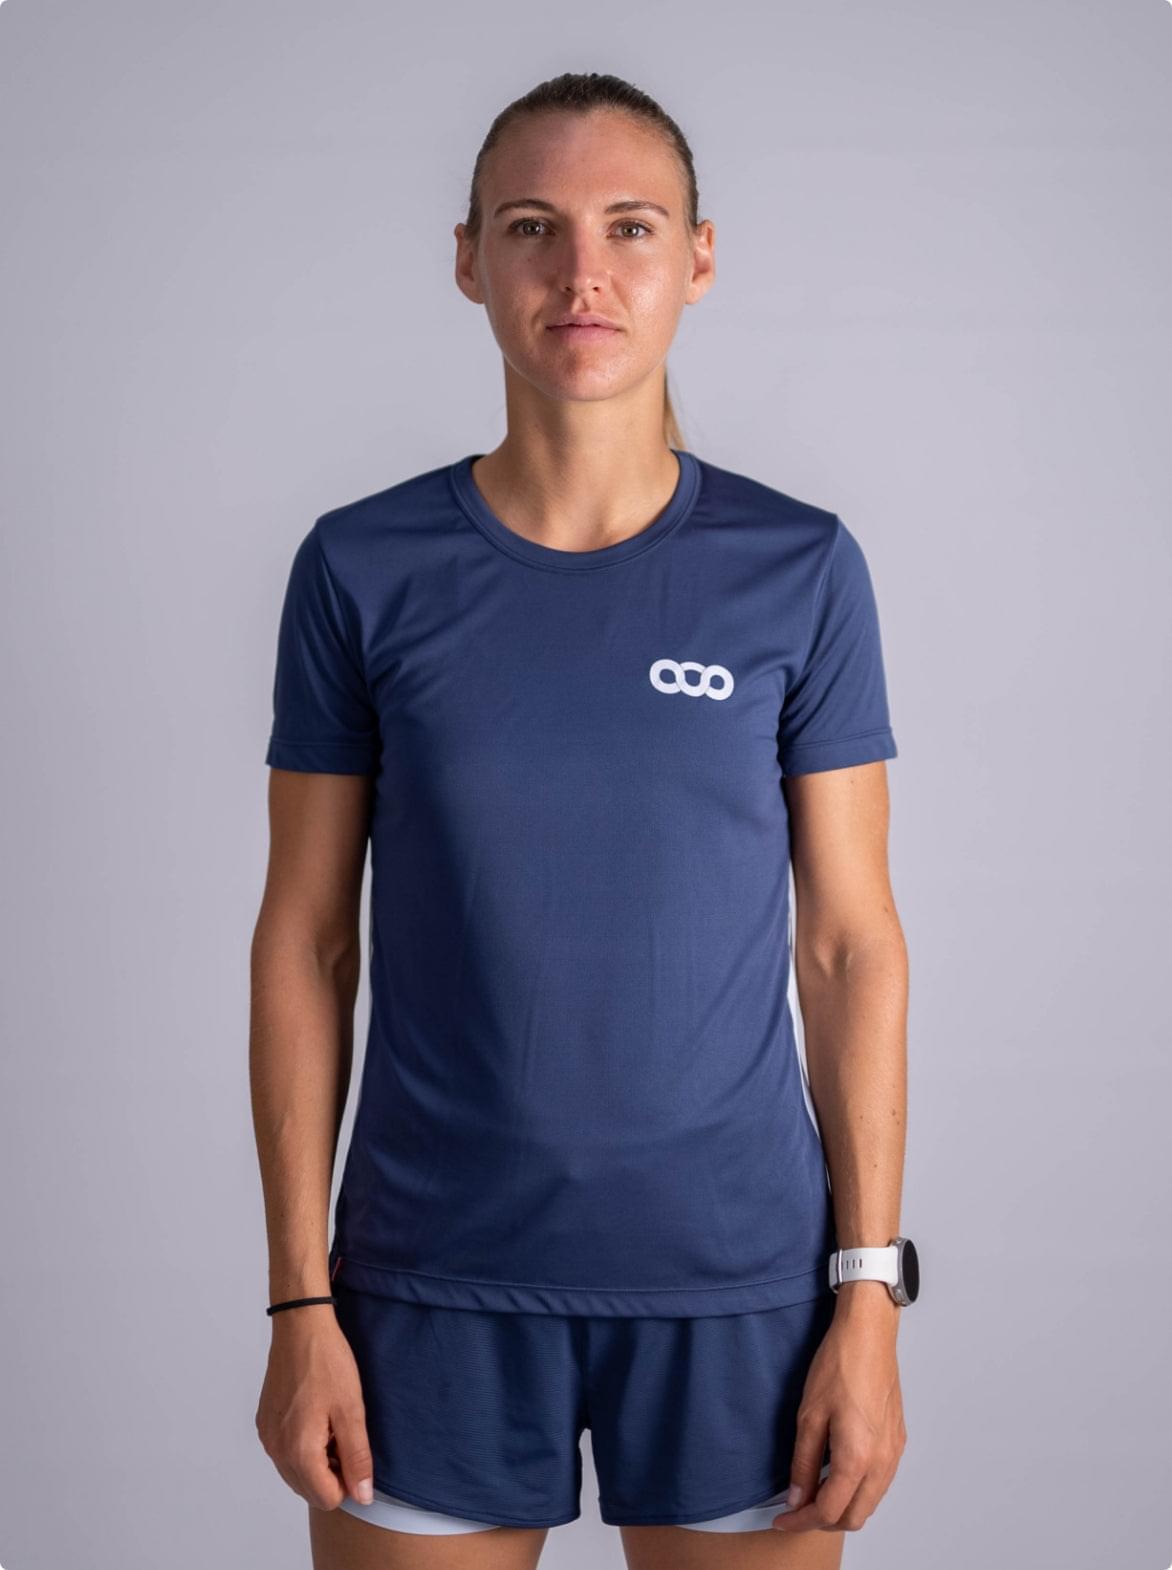 T-Shirt Running Femme Made in France et Recyclé - TOULON - Ventes privées